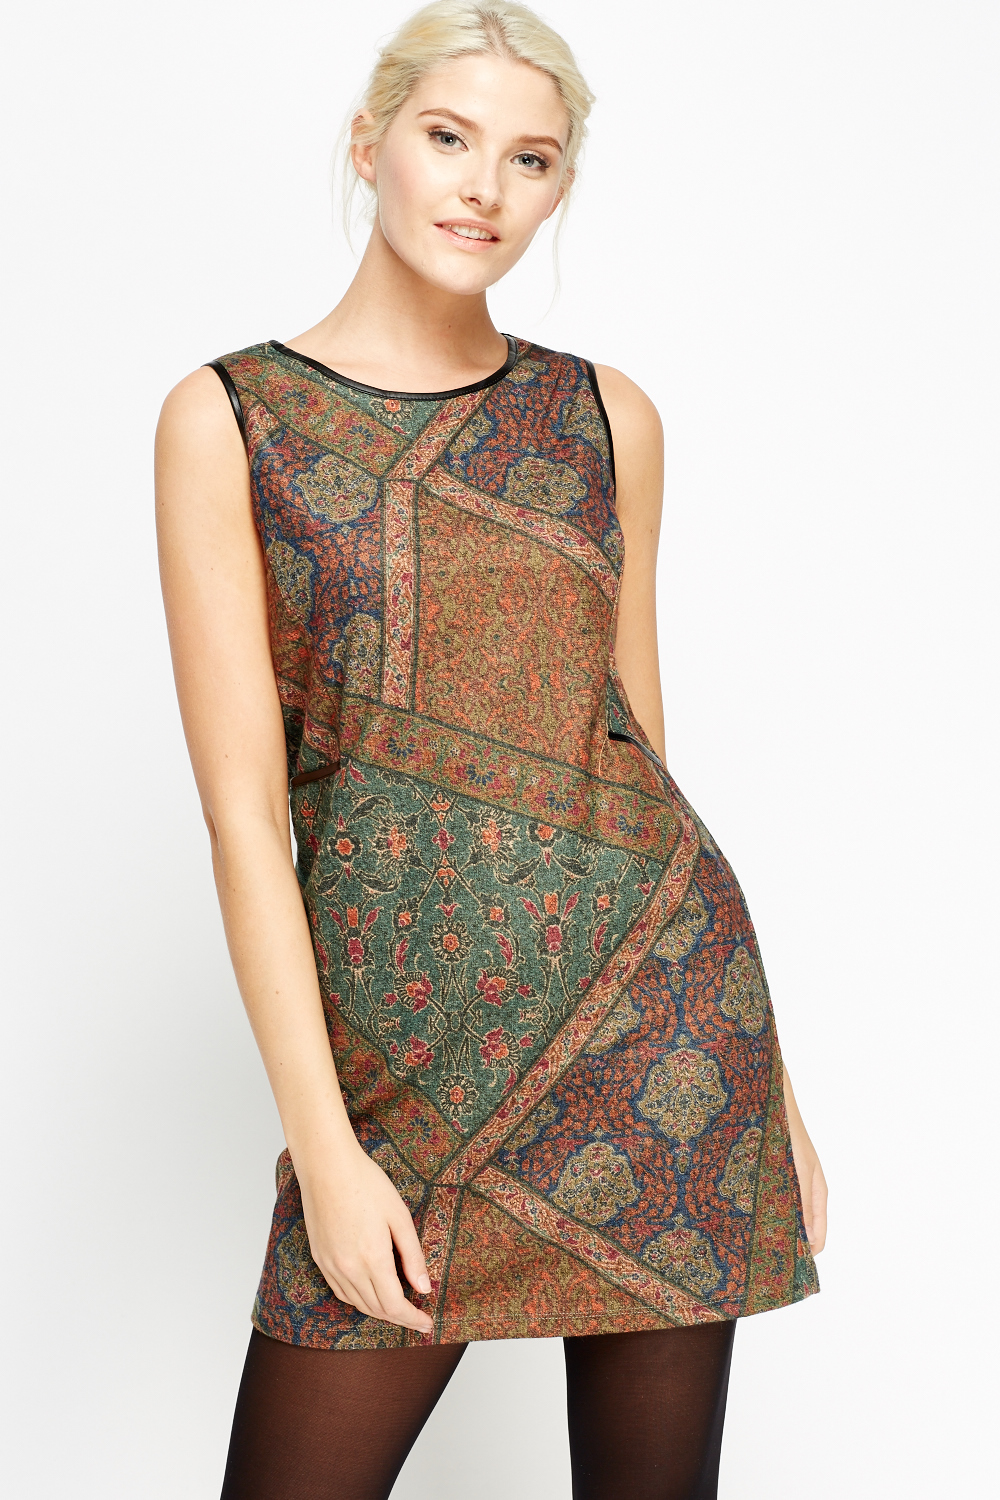 Geo Printed Mini Sleeveless Dress - Just $7